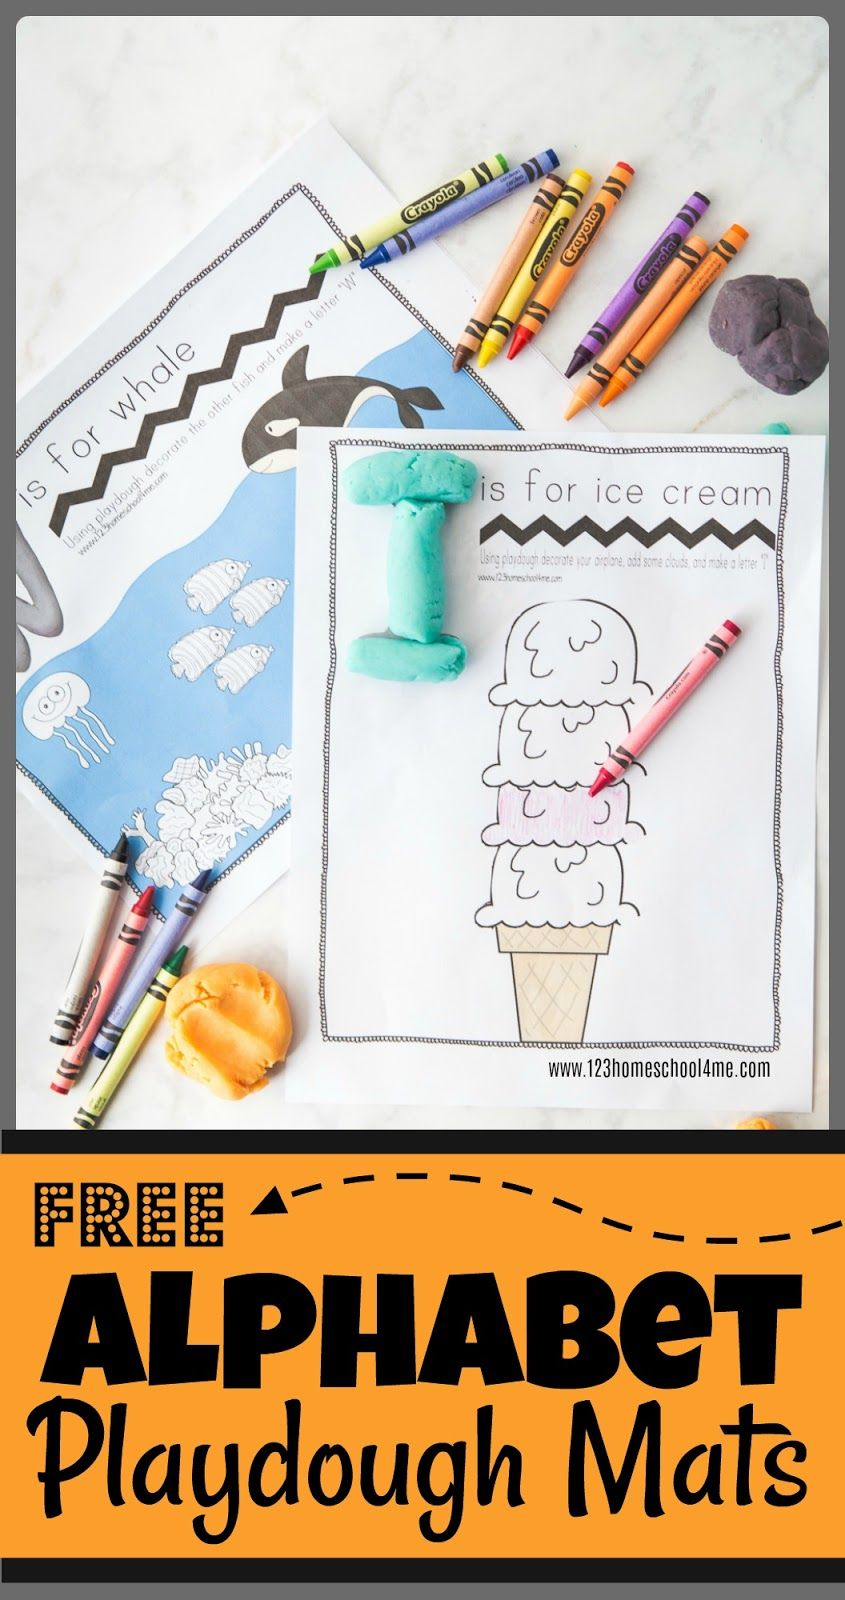 Free Alphabet Playdough Mats | Teach For The Future | Pinterest - Alphabet Playdough Mats Free Printable